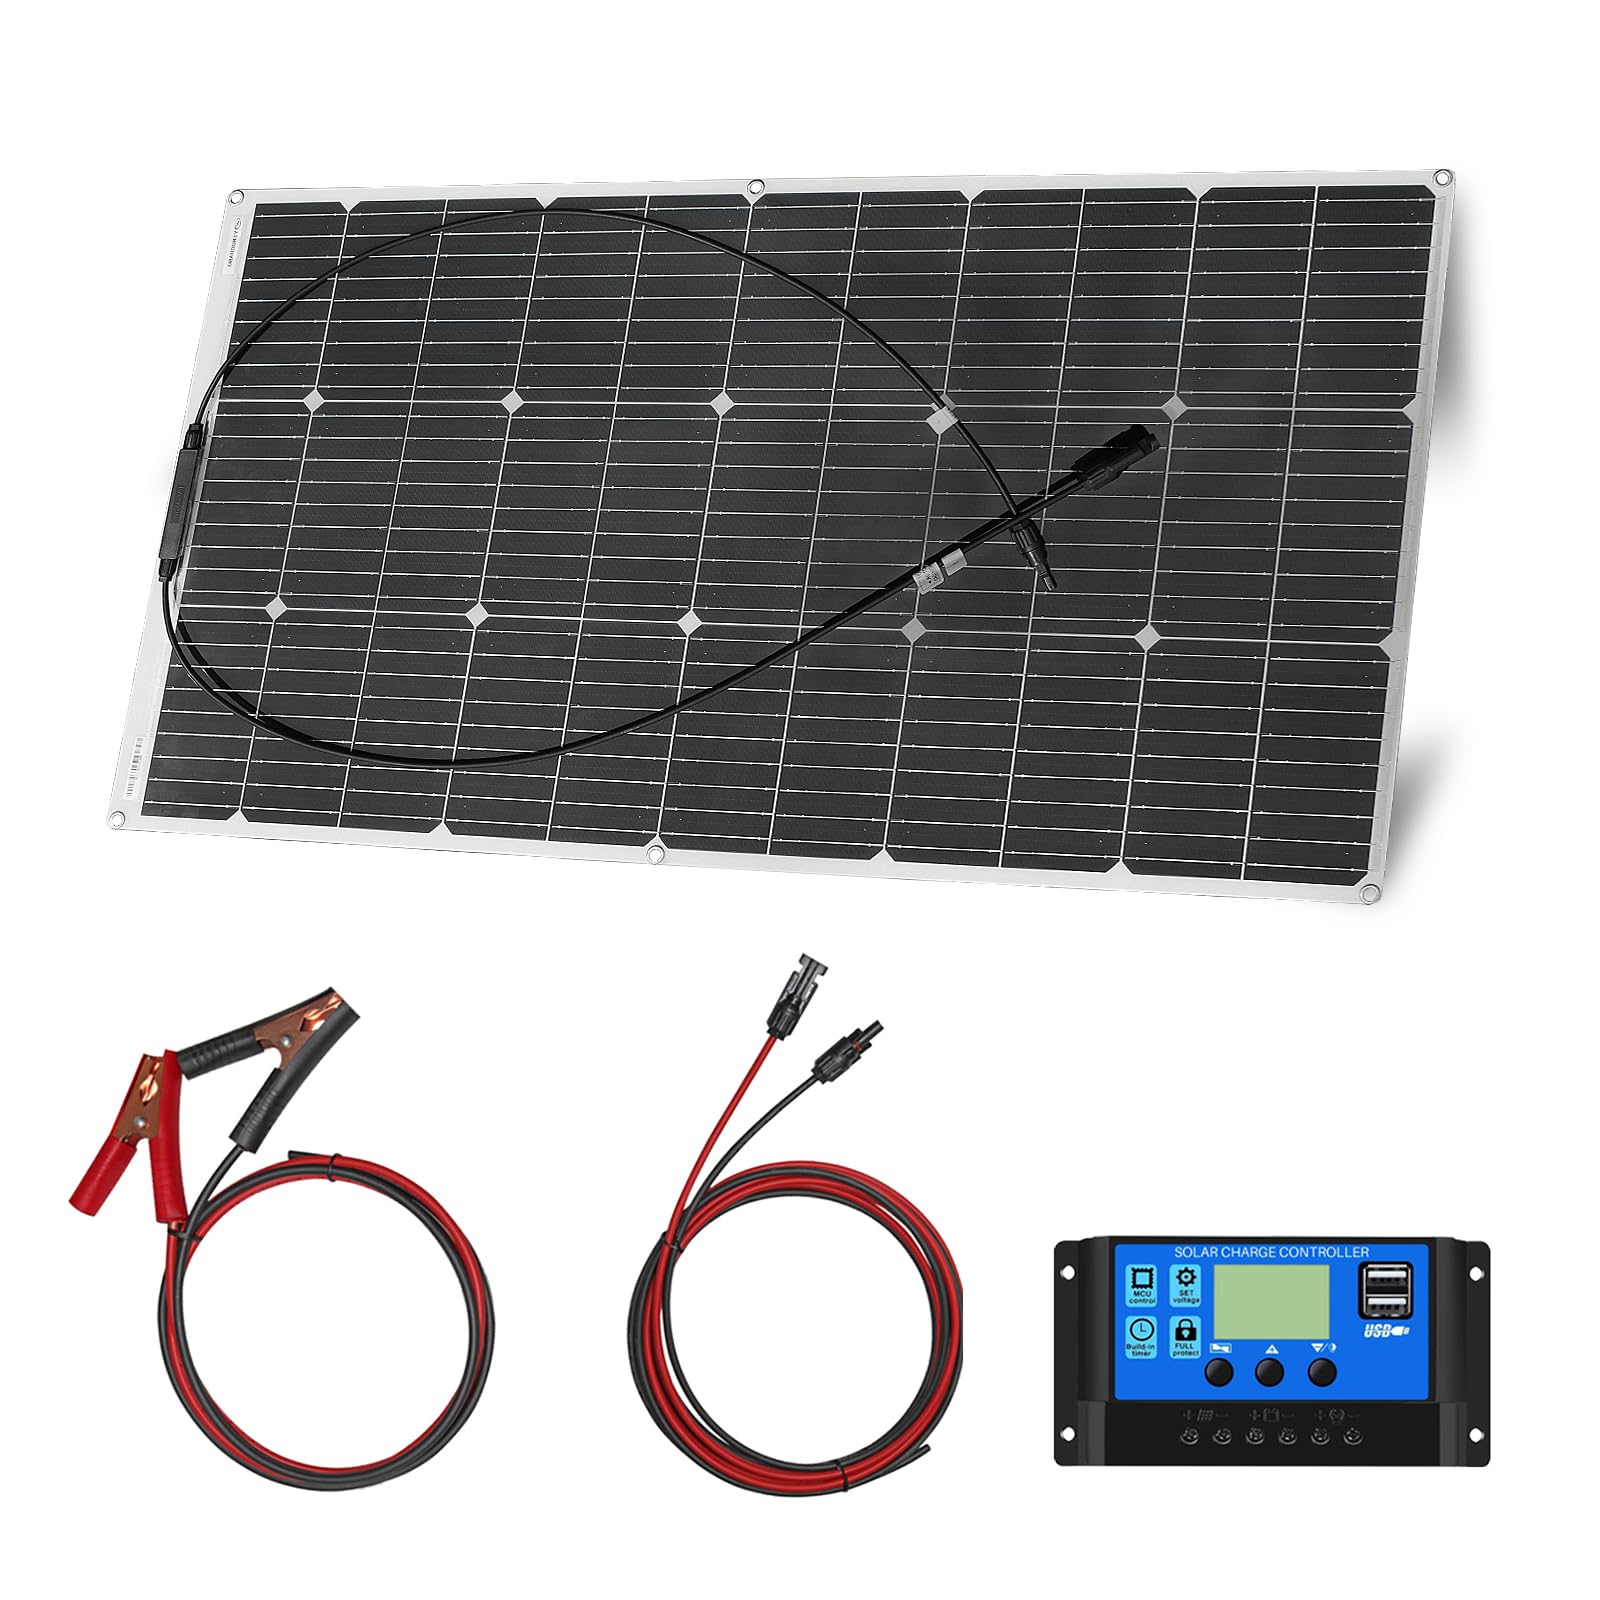 100W Flexibles Solarpanel Kit Biegsames solarmodul Kit 10A Solar Laderegler für Wohnmobil, Auto, Camping,Boot.